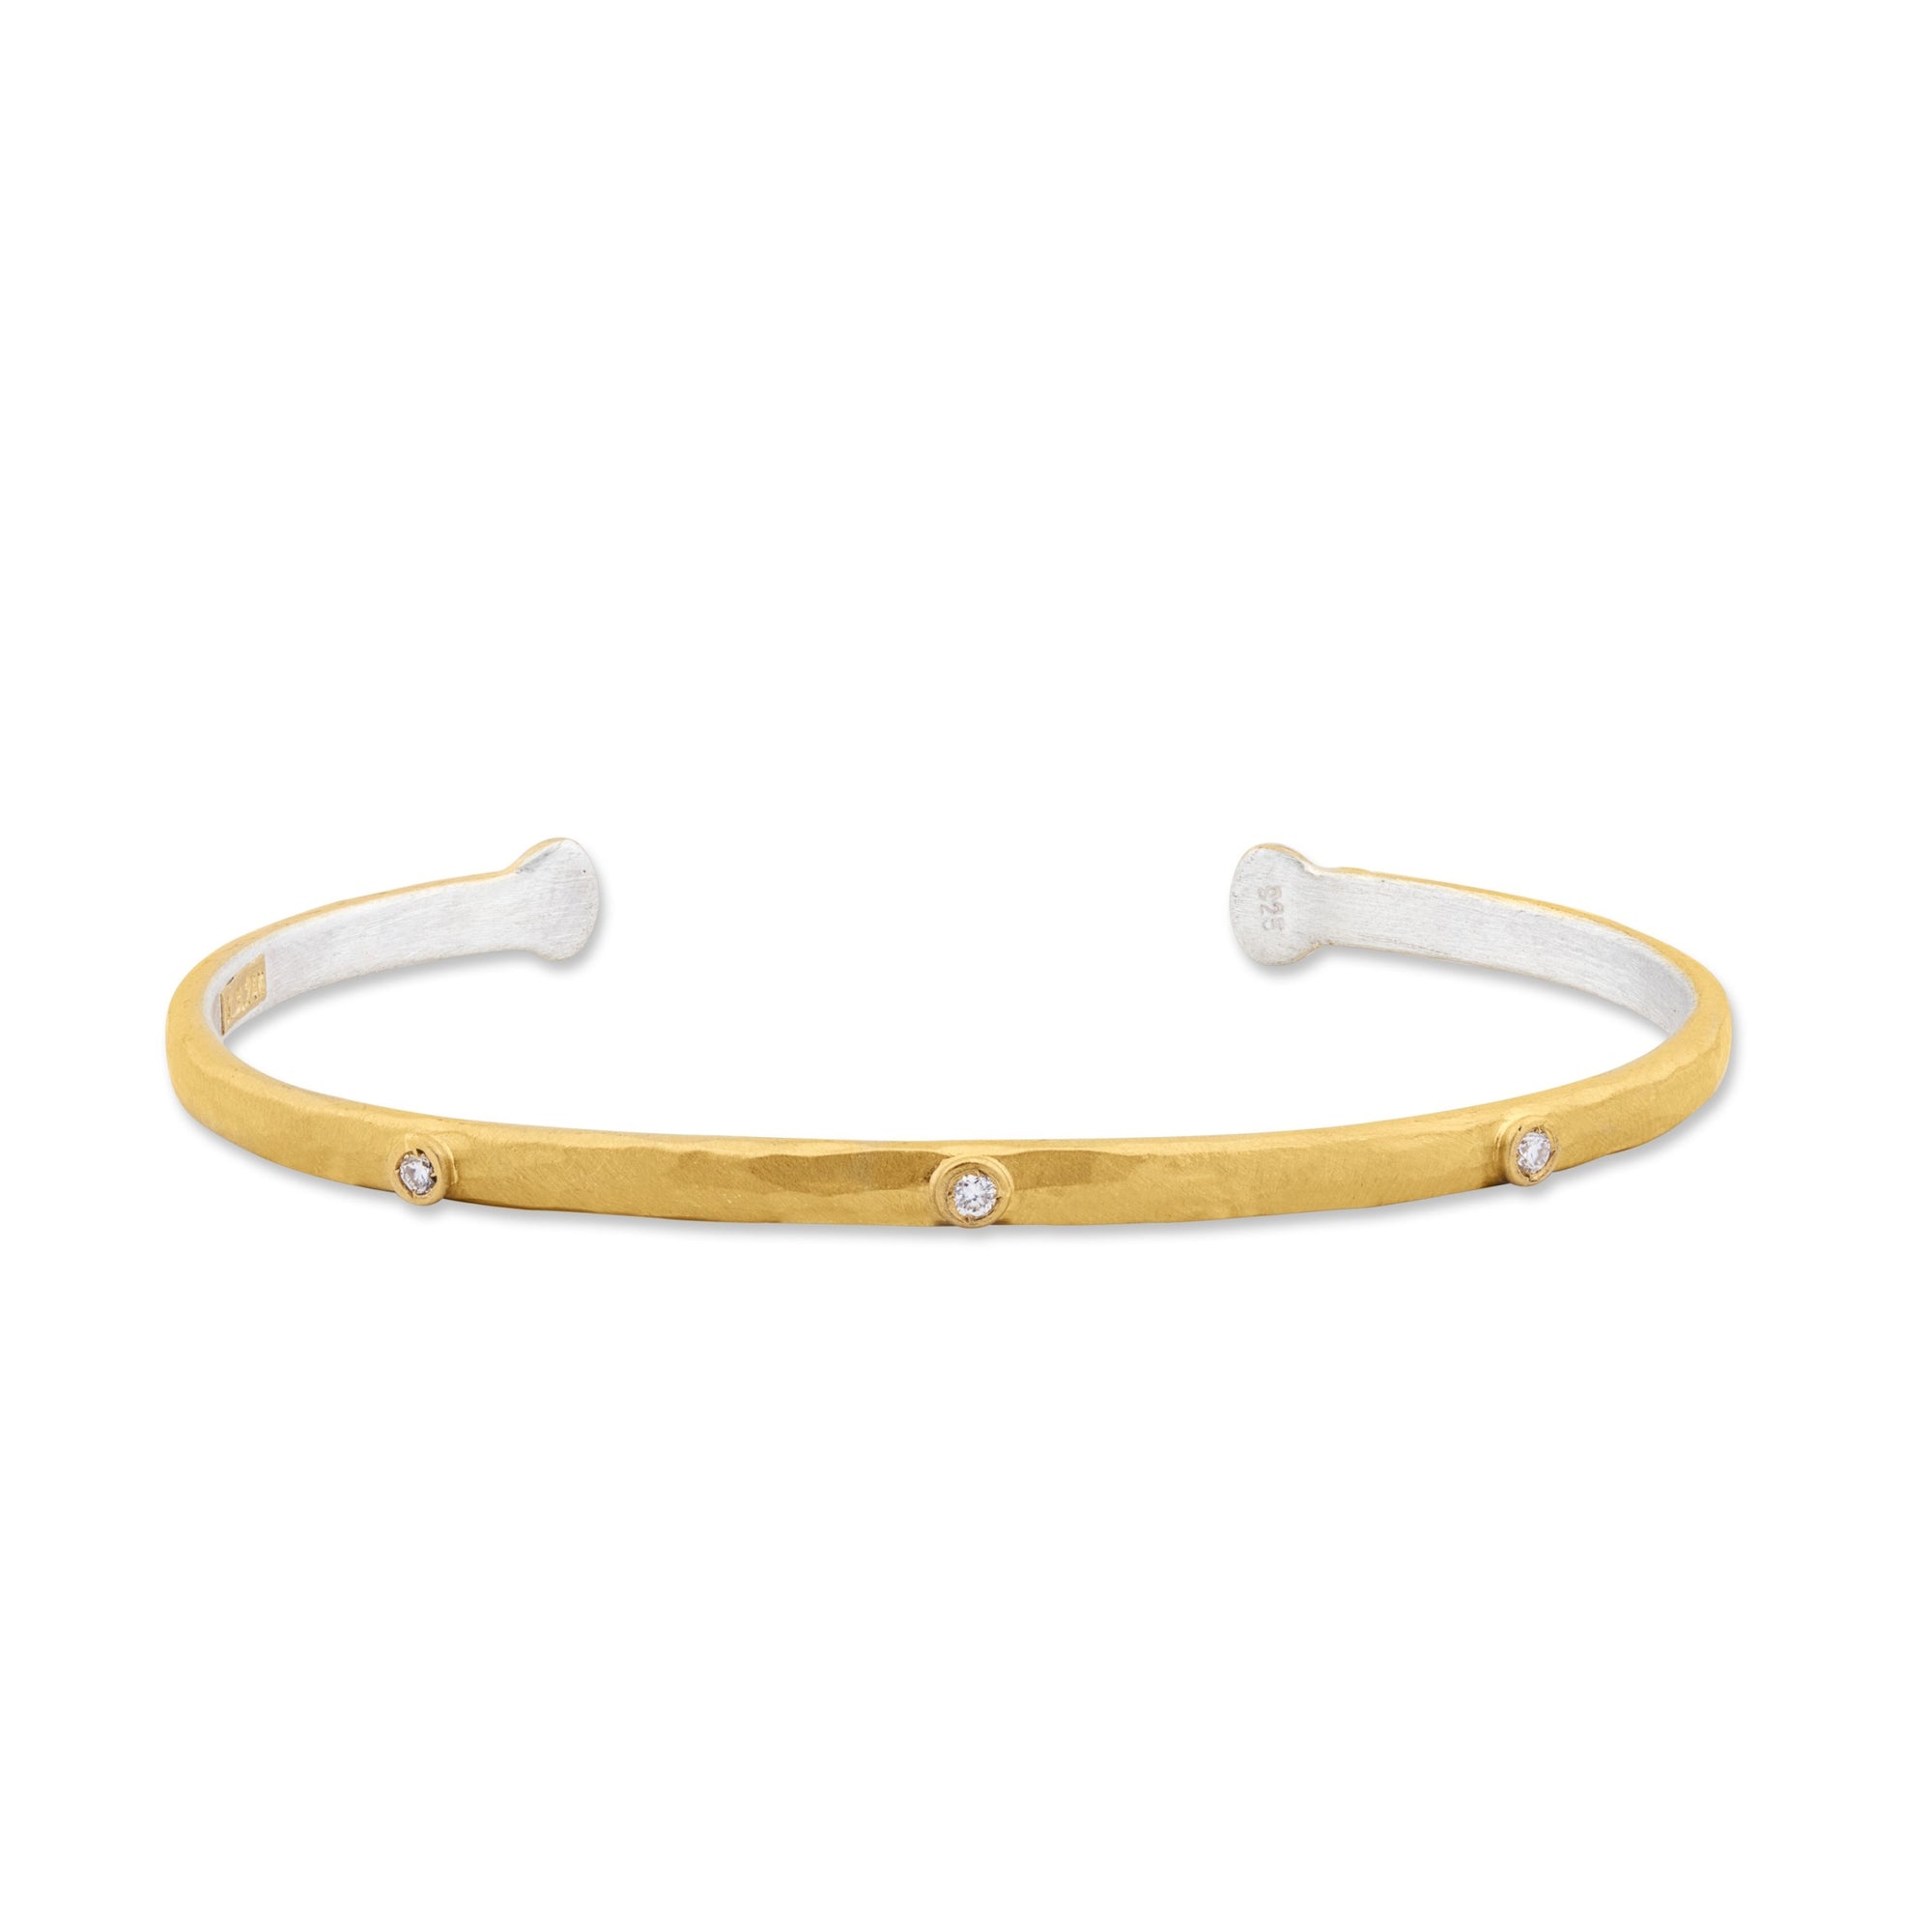 Lika Behar 24K Fusion Gold & Sterling Silver Diamond Cuff “Baby Stockholm” Bracelet